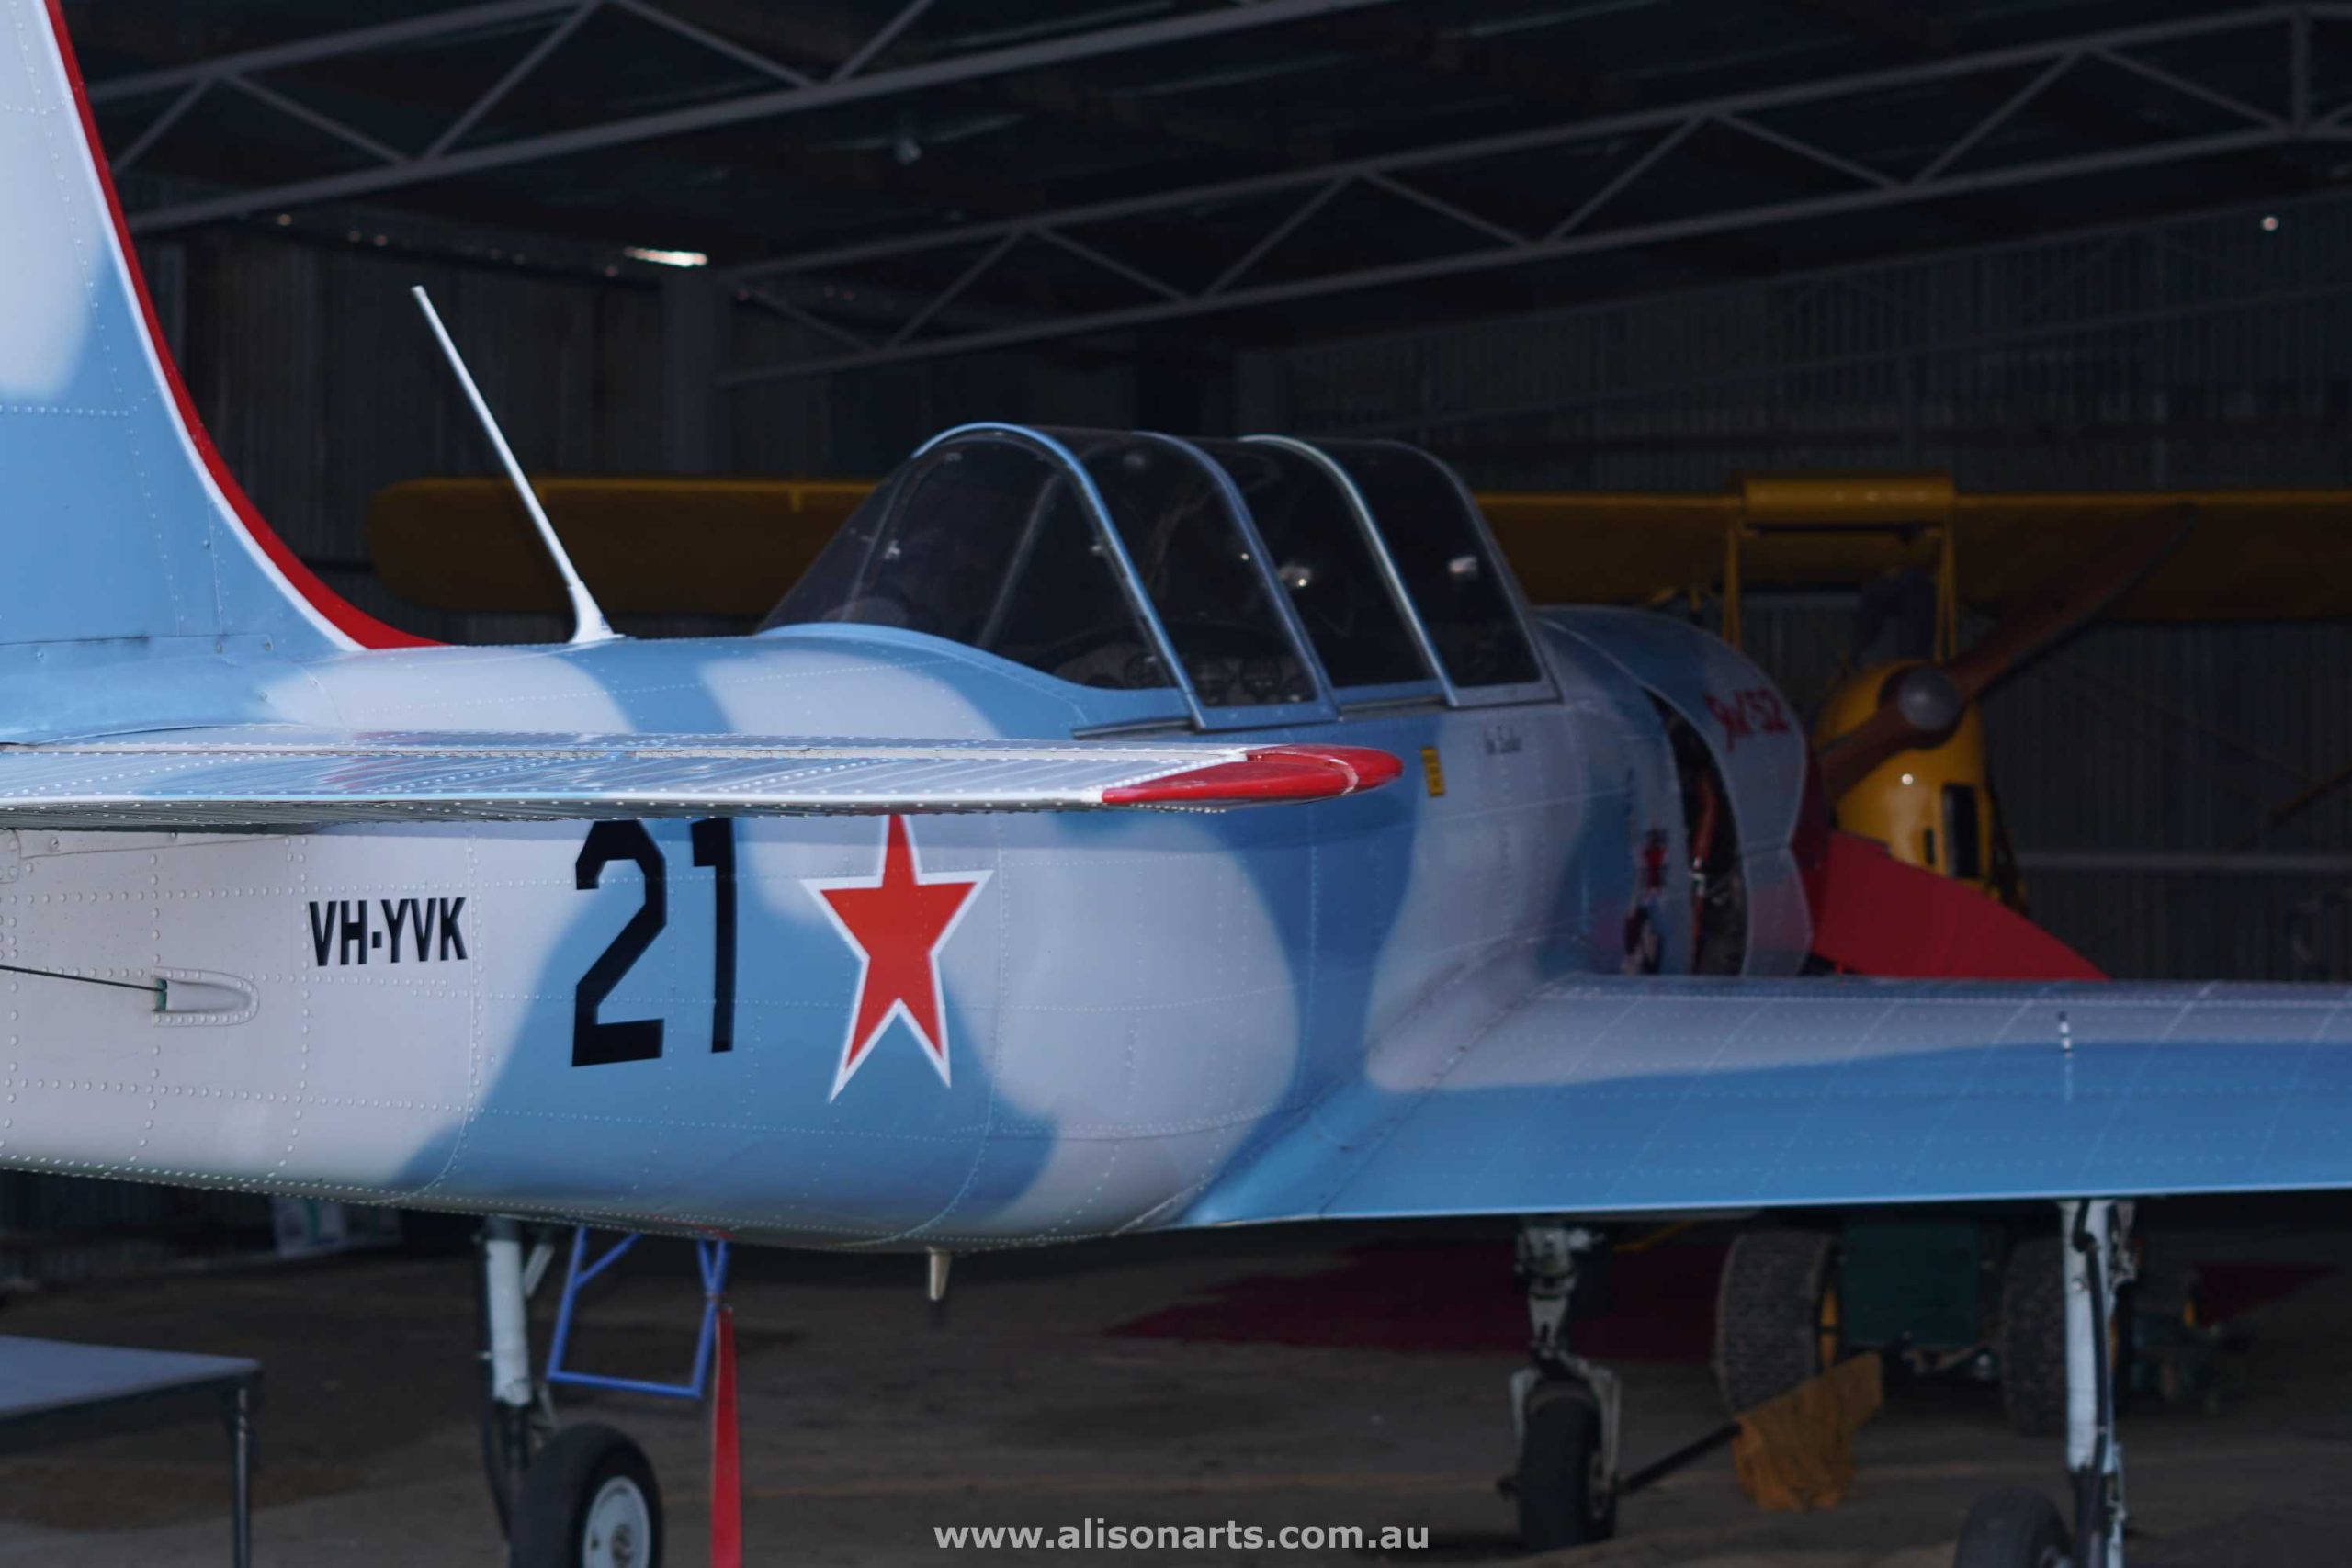 Custom airbrushed Yak-52 plane